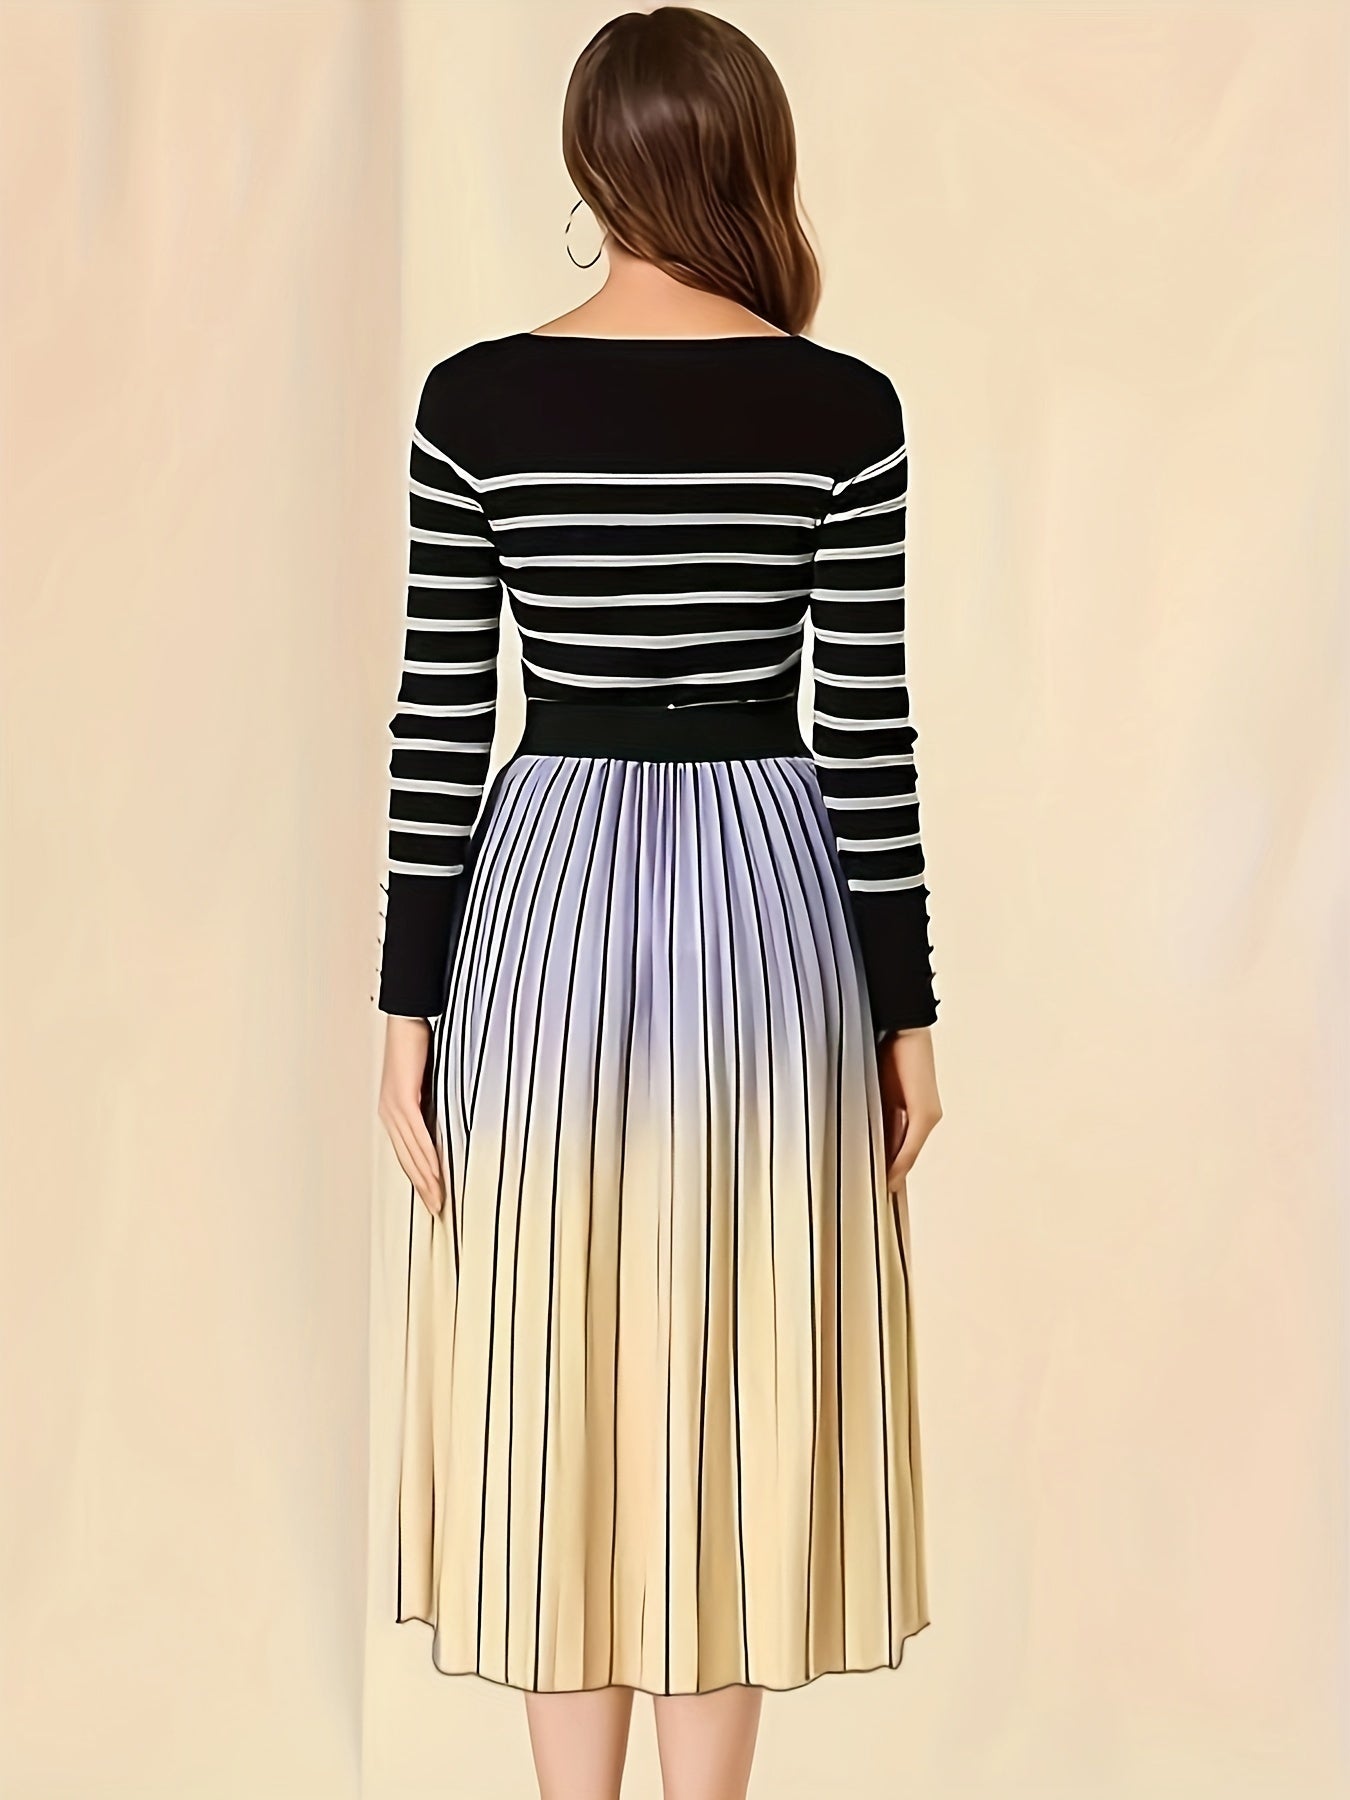 Plus Size Elegant Skirt, Women's Plus Ombre Print Elastic Waisted Pleated A-line Skirt